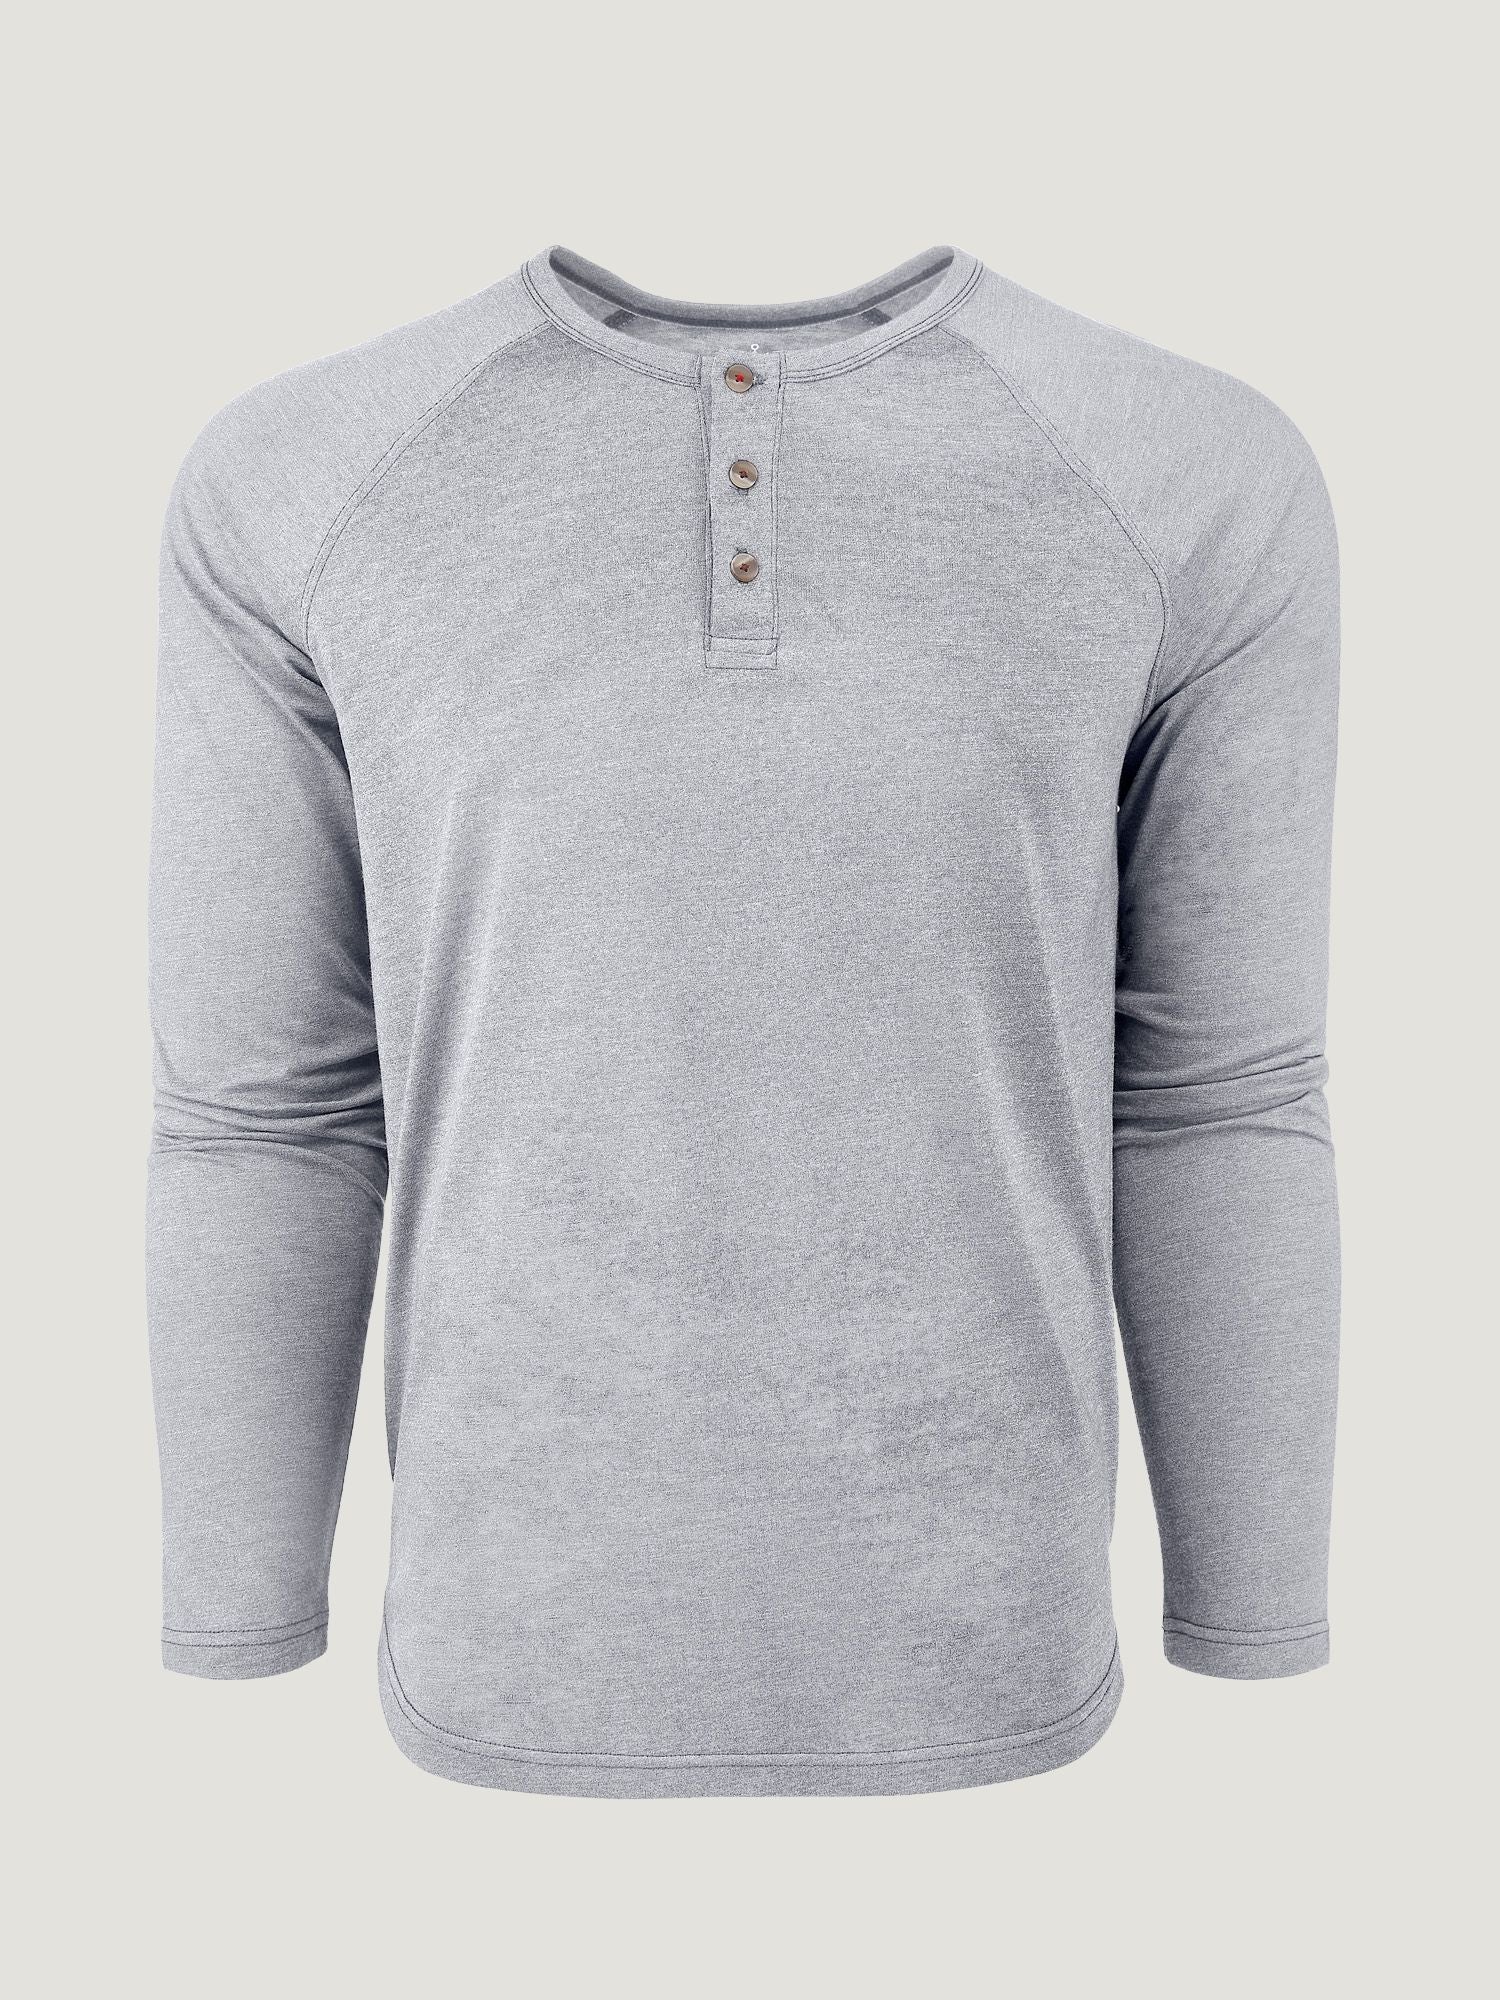 Essentials Men's Slim-Fit Long-Sleeve Henley Shirt, Black